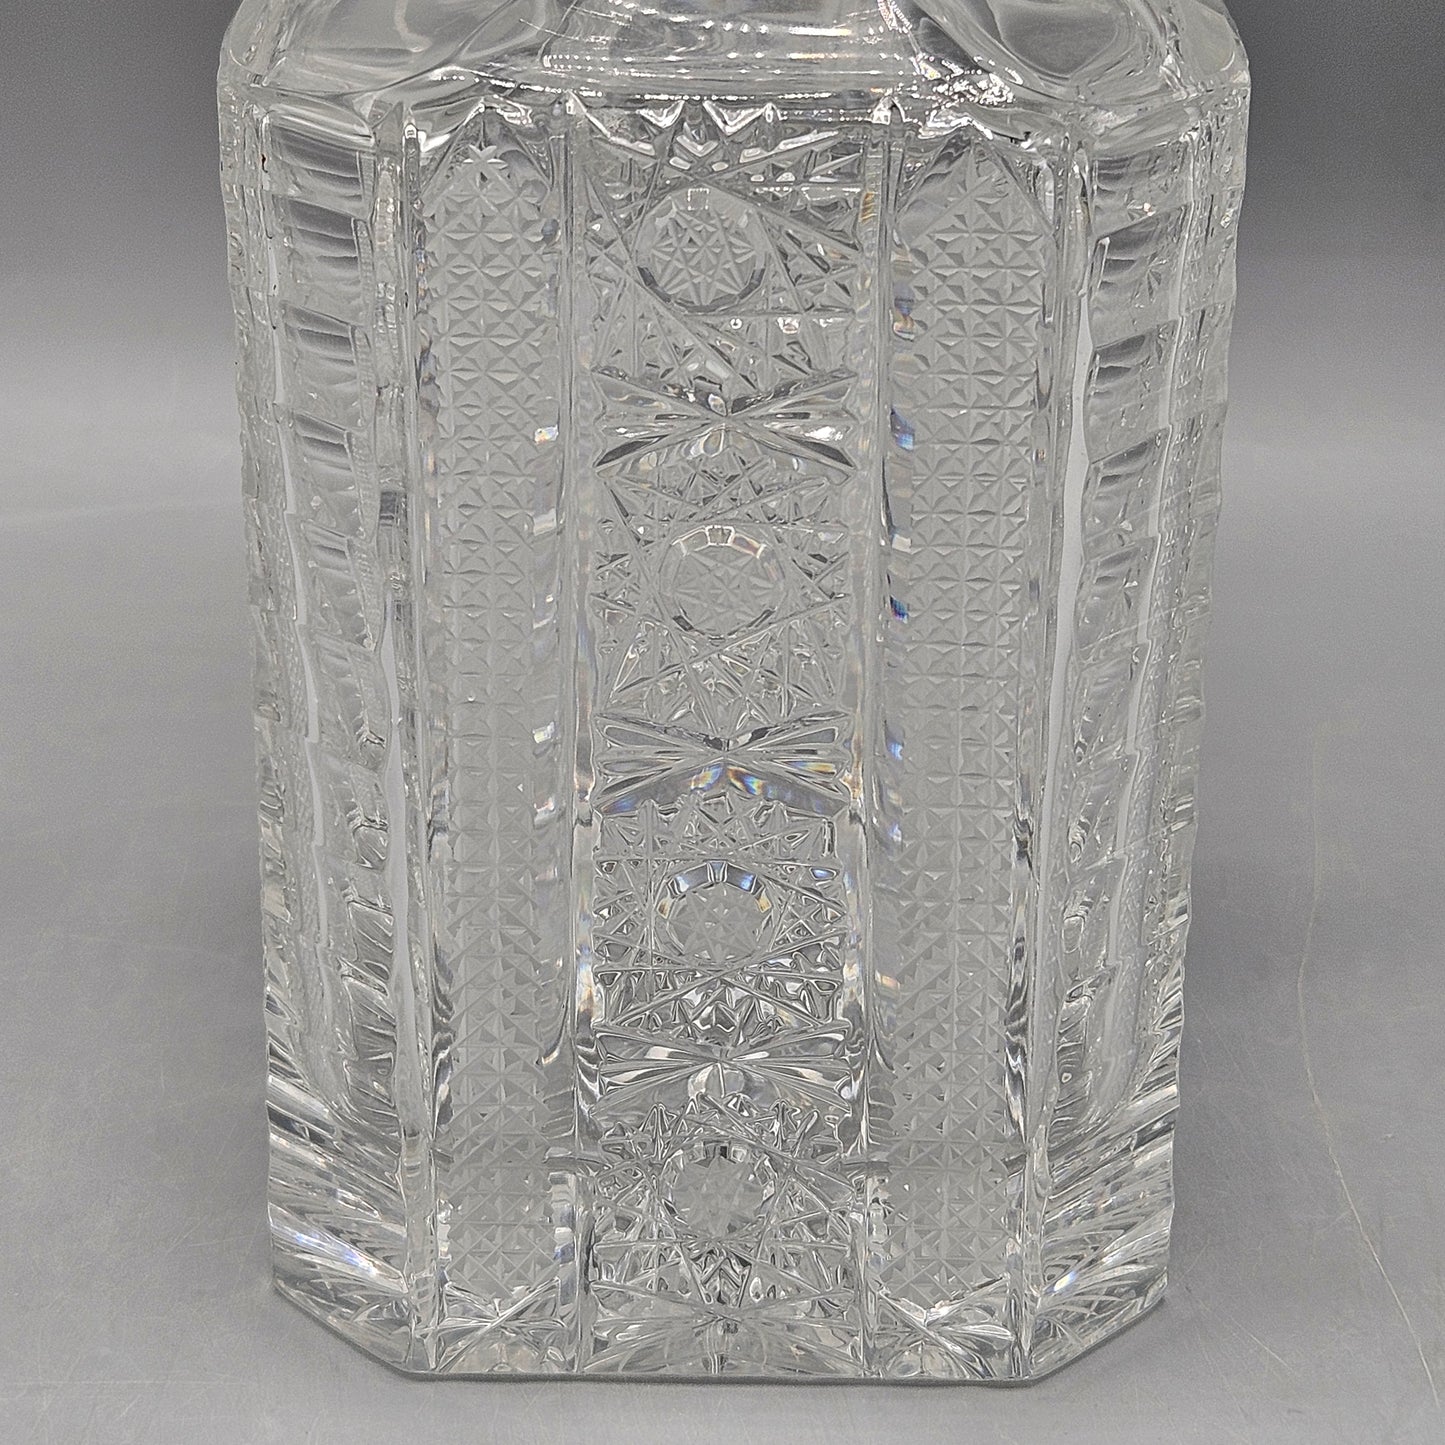 Vintage Bohemia Crystal Glass Whiskey Decanter